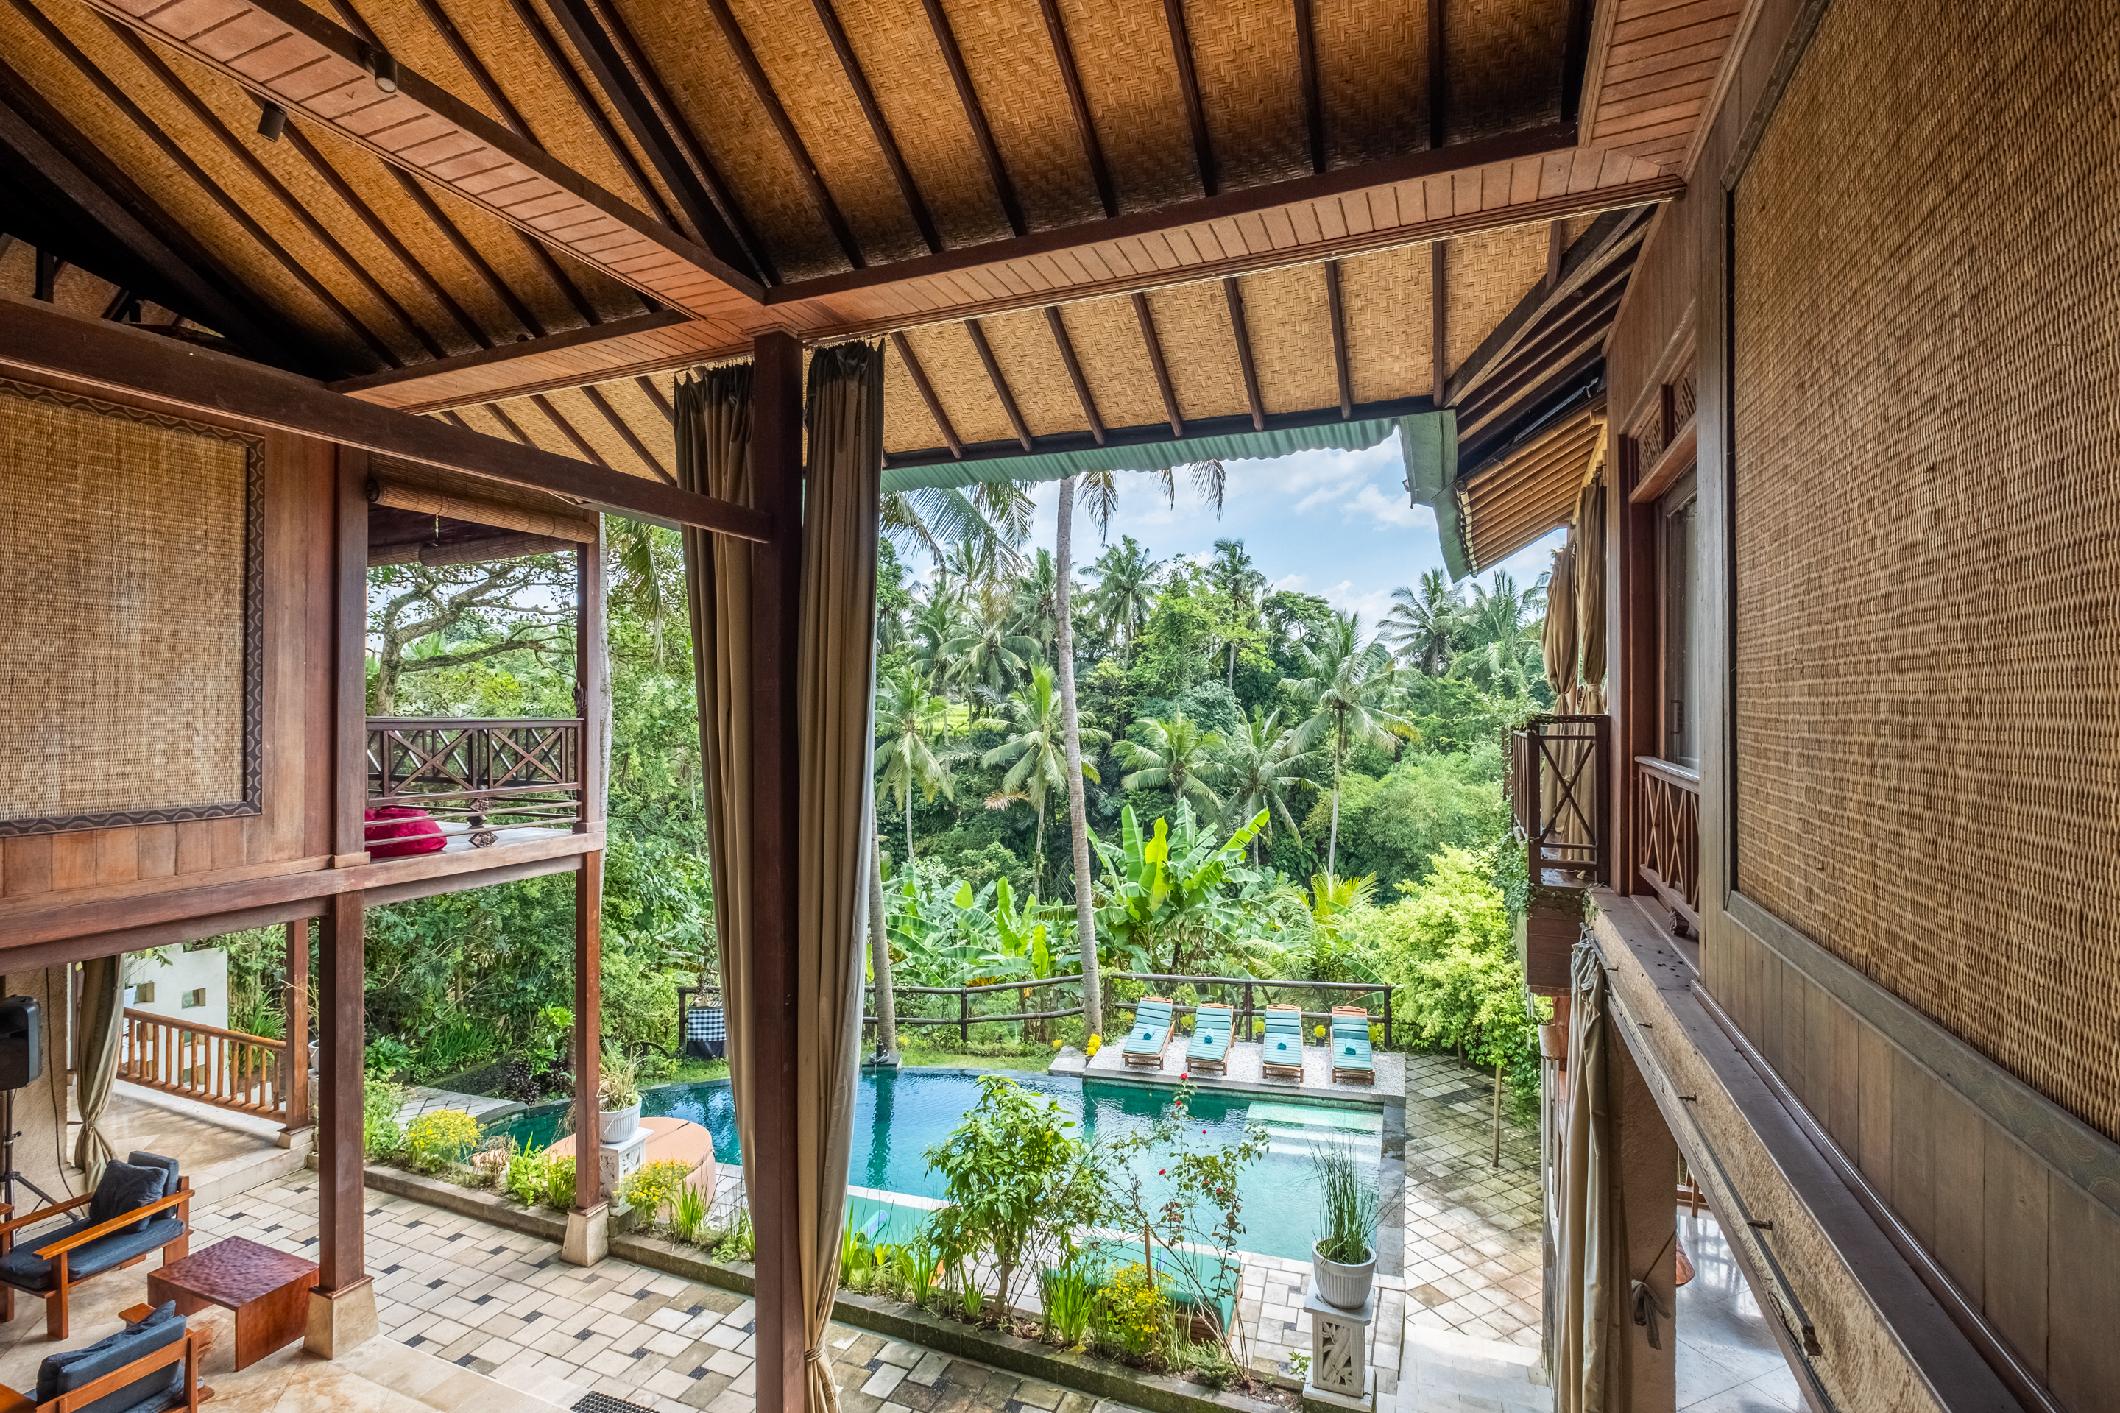 Welcom to Gaia Retreat Center in Ubud, Bali, Indonesia